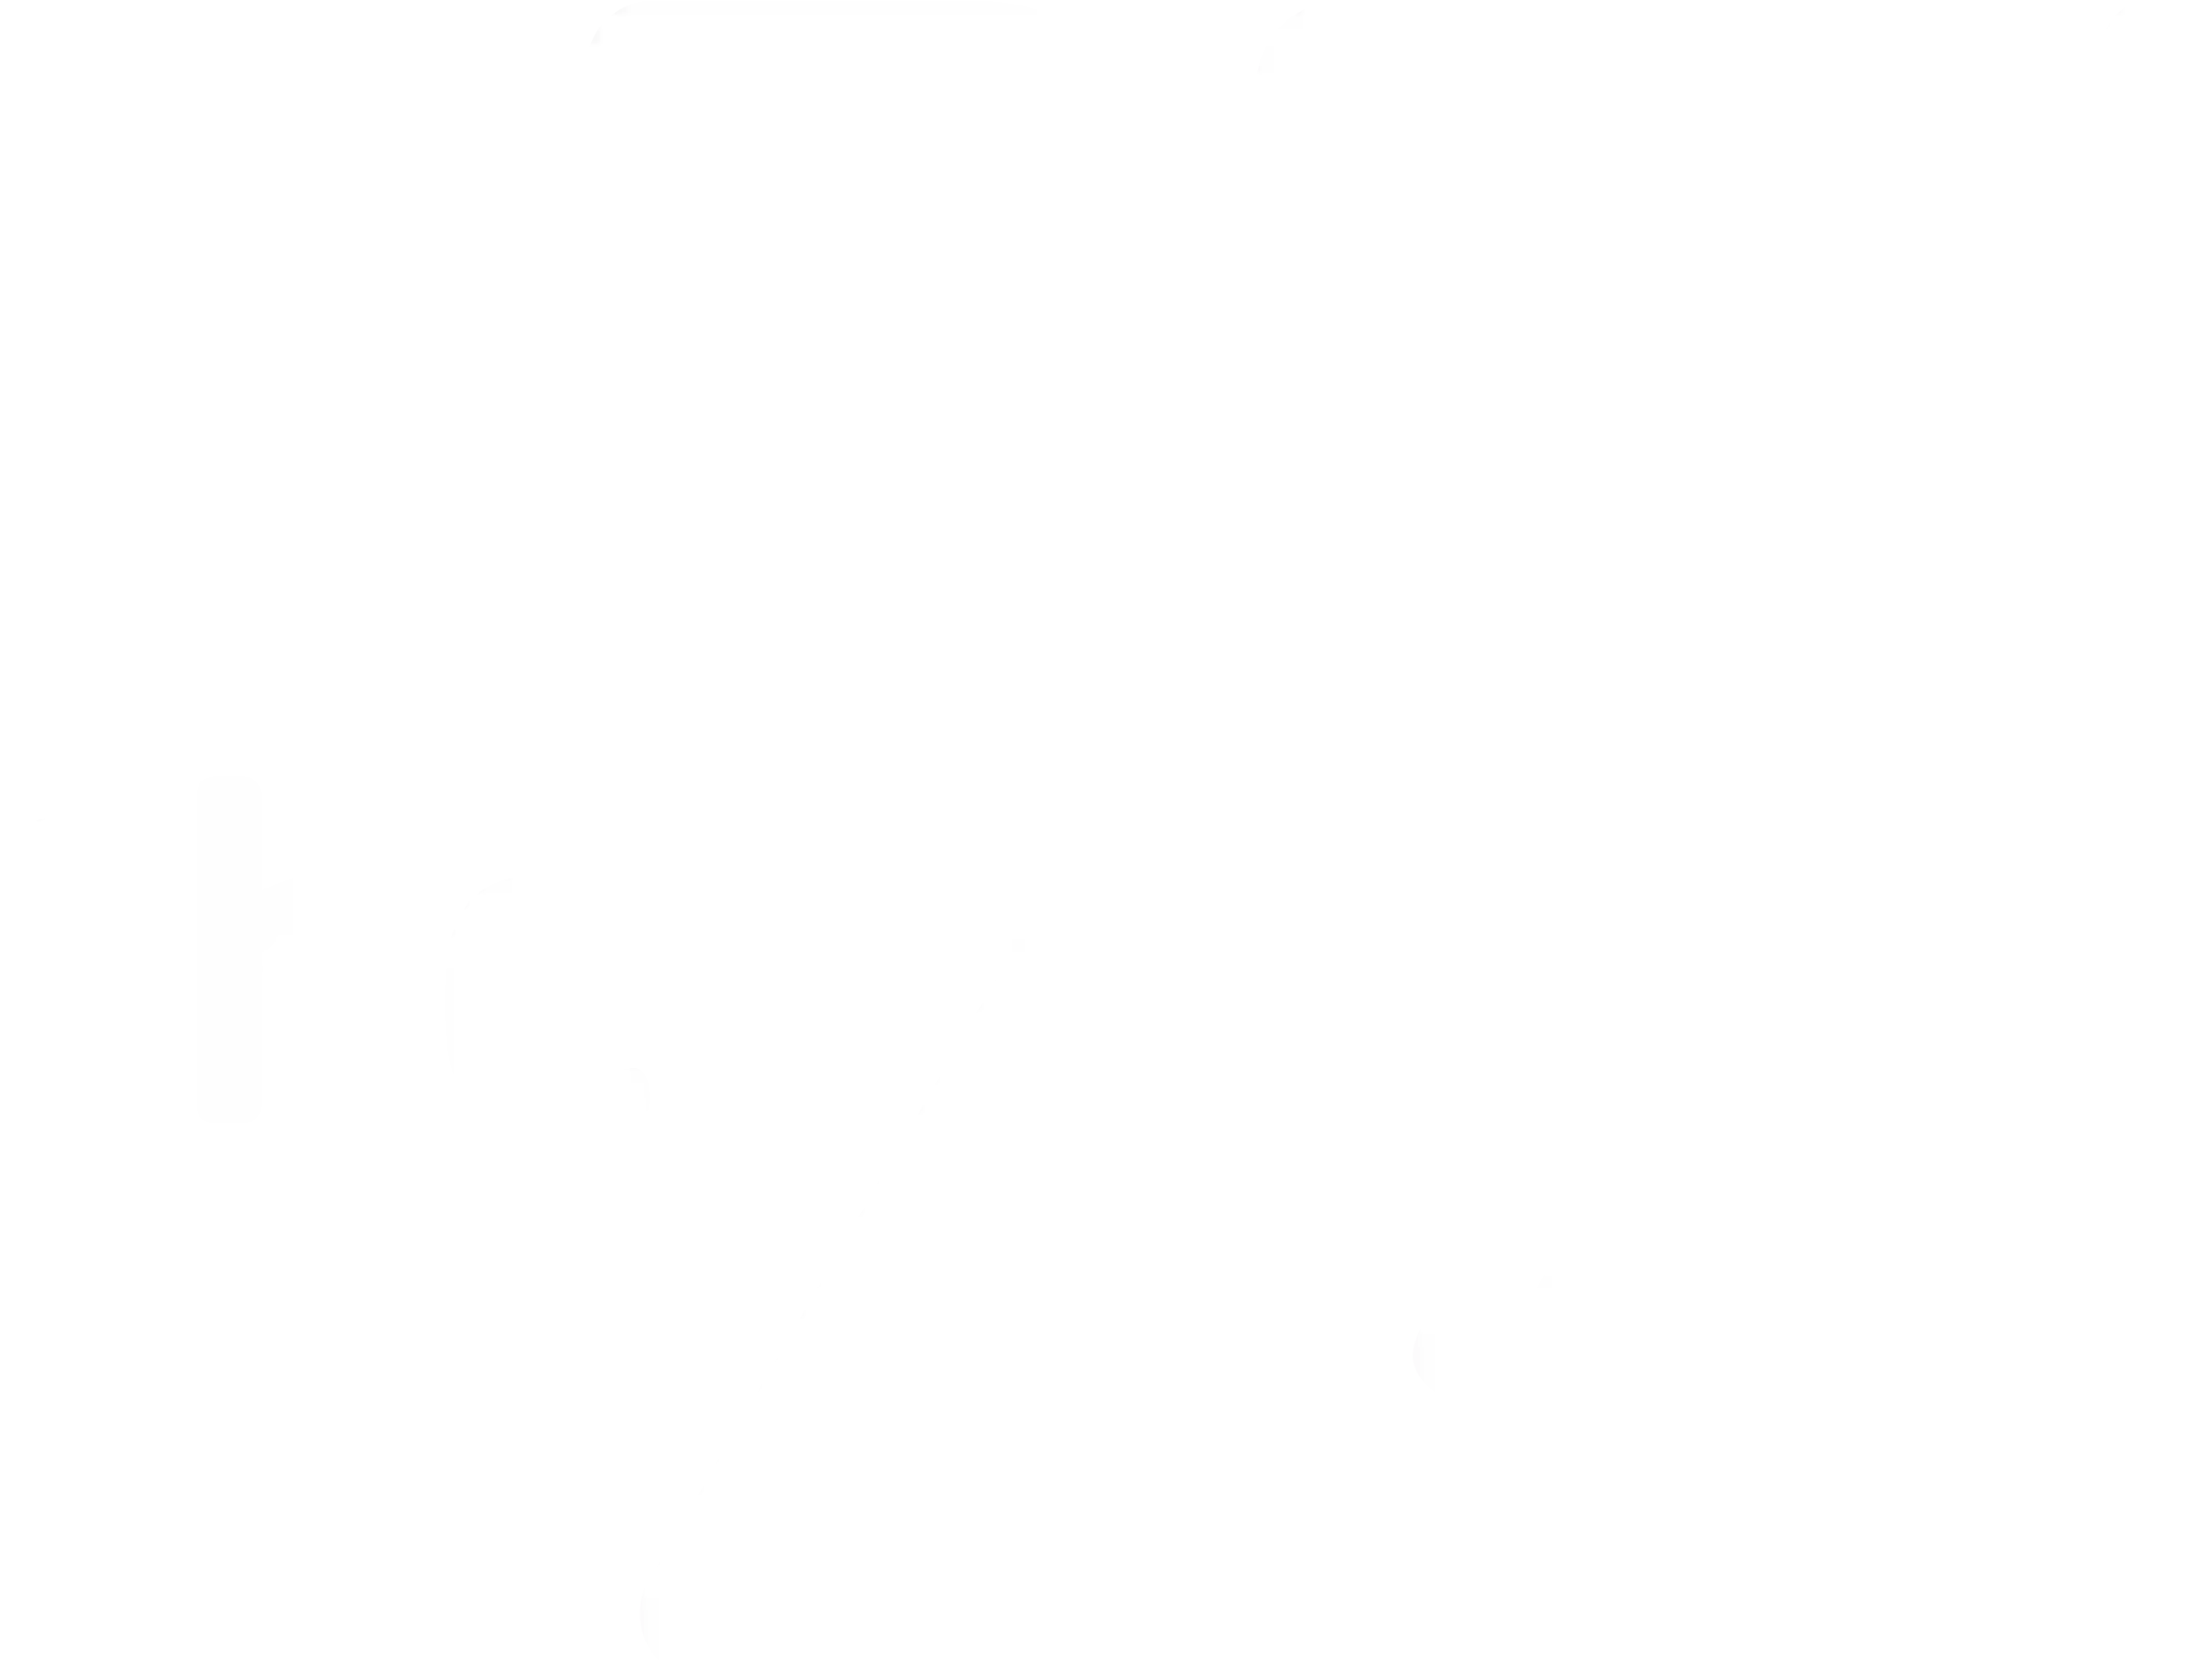 YMCA of Kanawha Valley